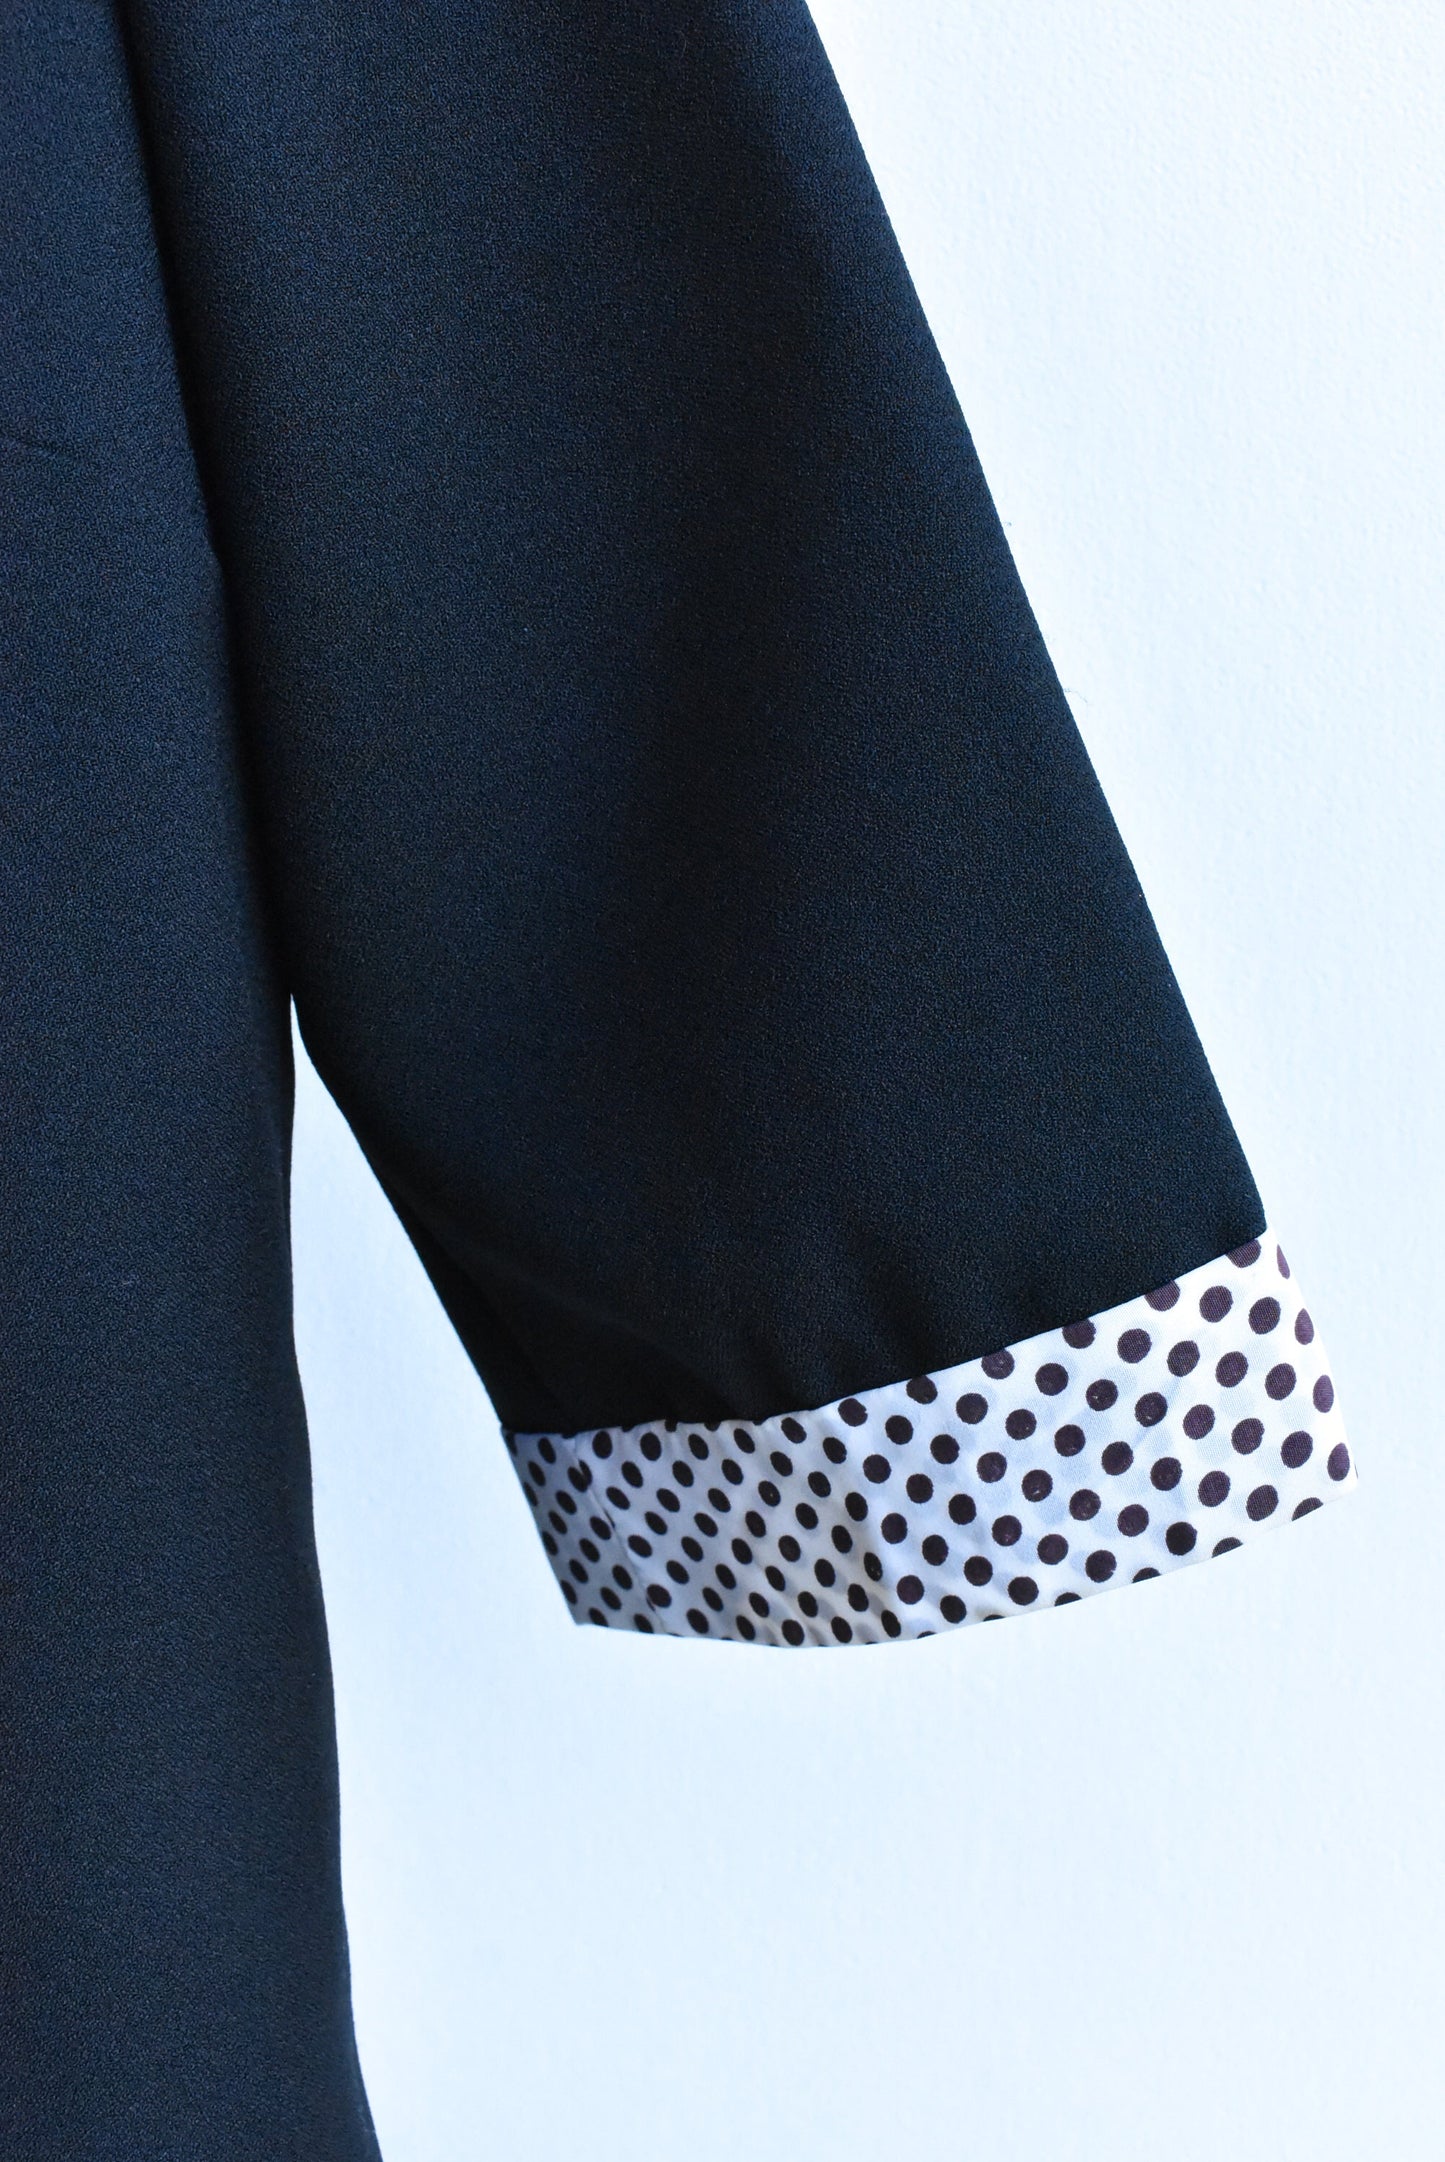 Camette retro black jacket midi sleeve with polka dot detail, size S